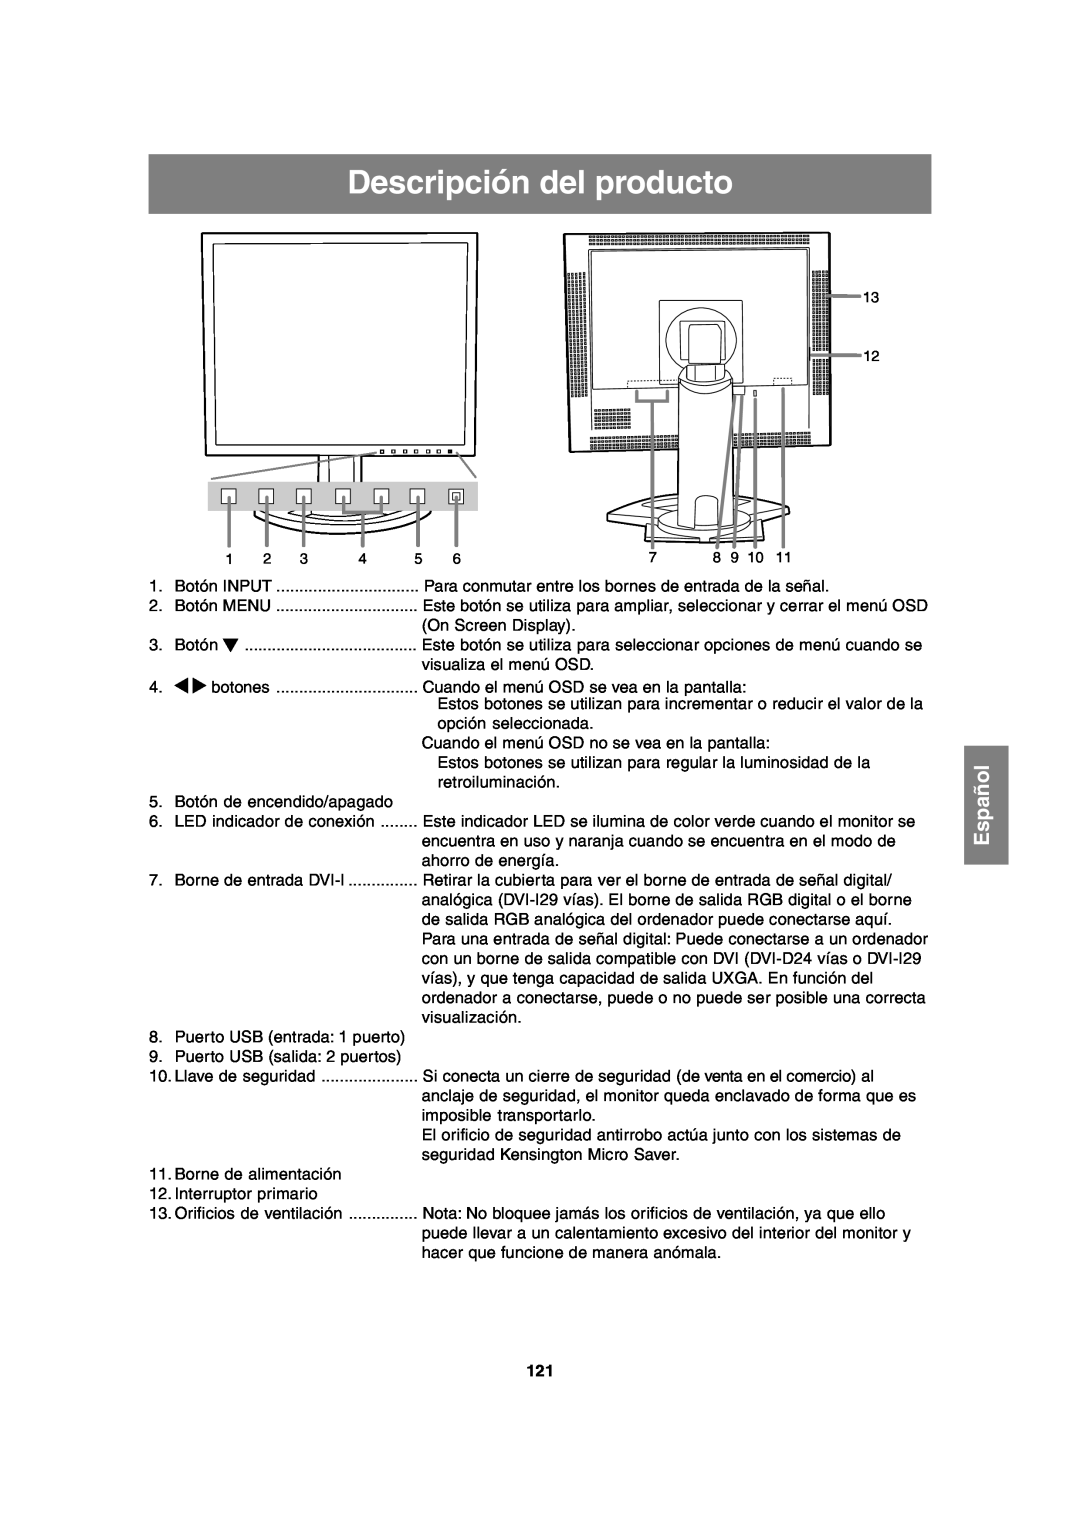 Sharp LL-T2020 operation manual Descripción del producto, Español 